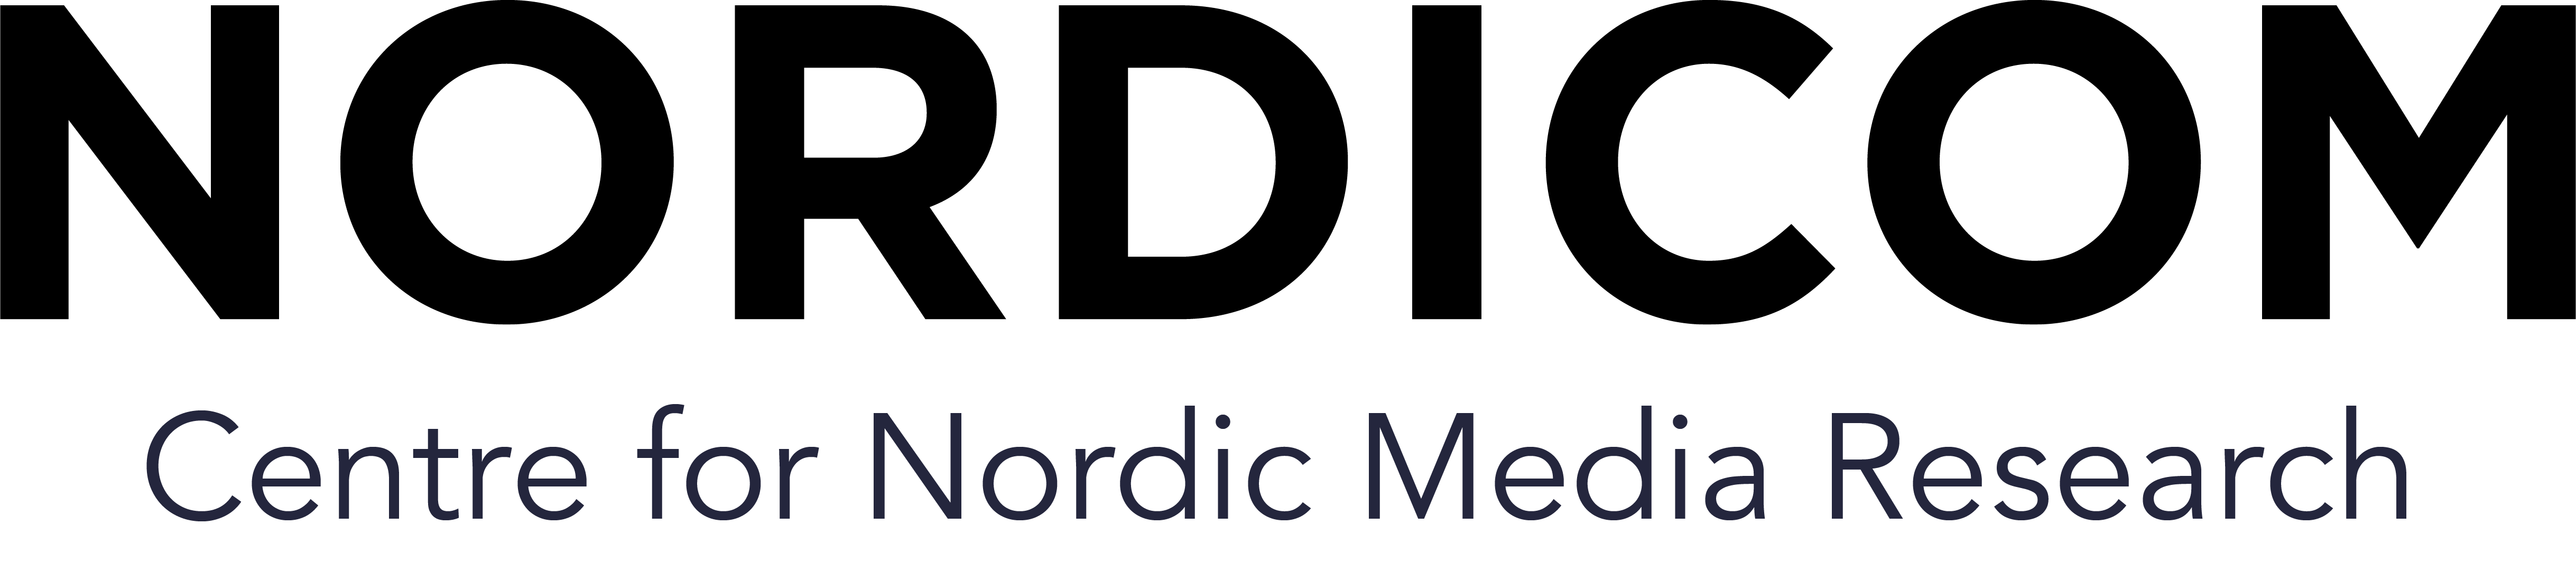 Logotyp engelska text: Nordicom. Centre for Nordic Media Research.